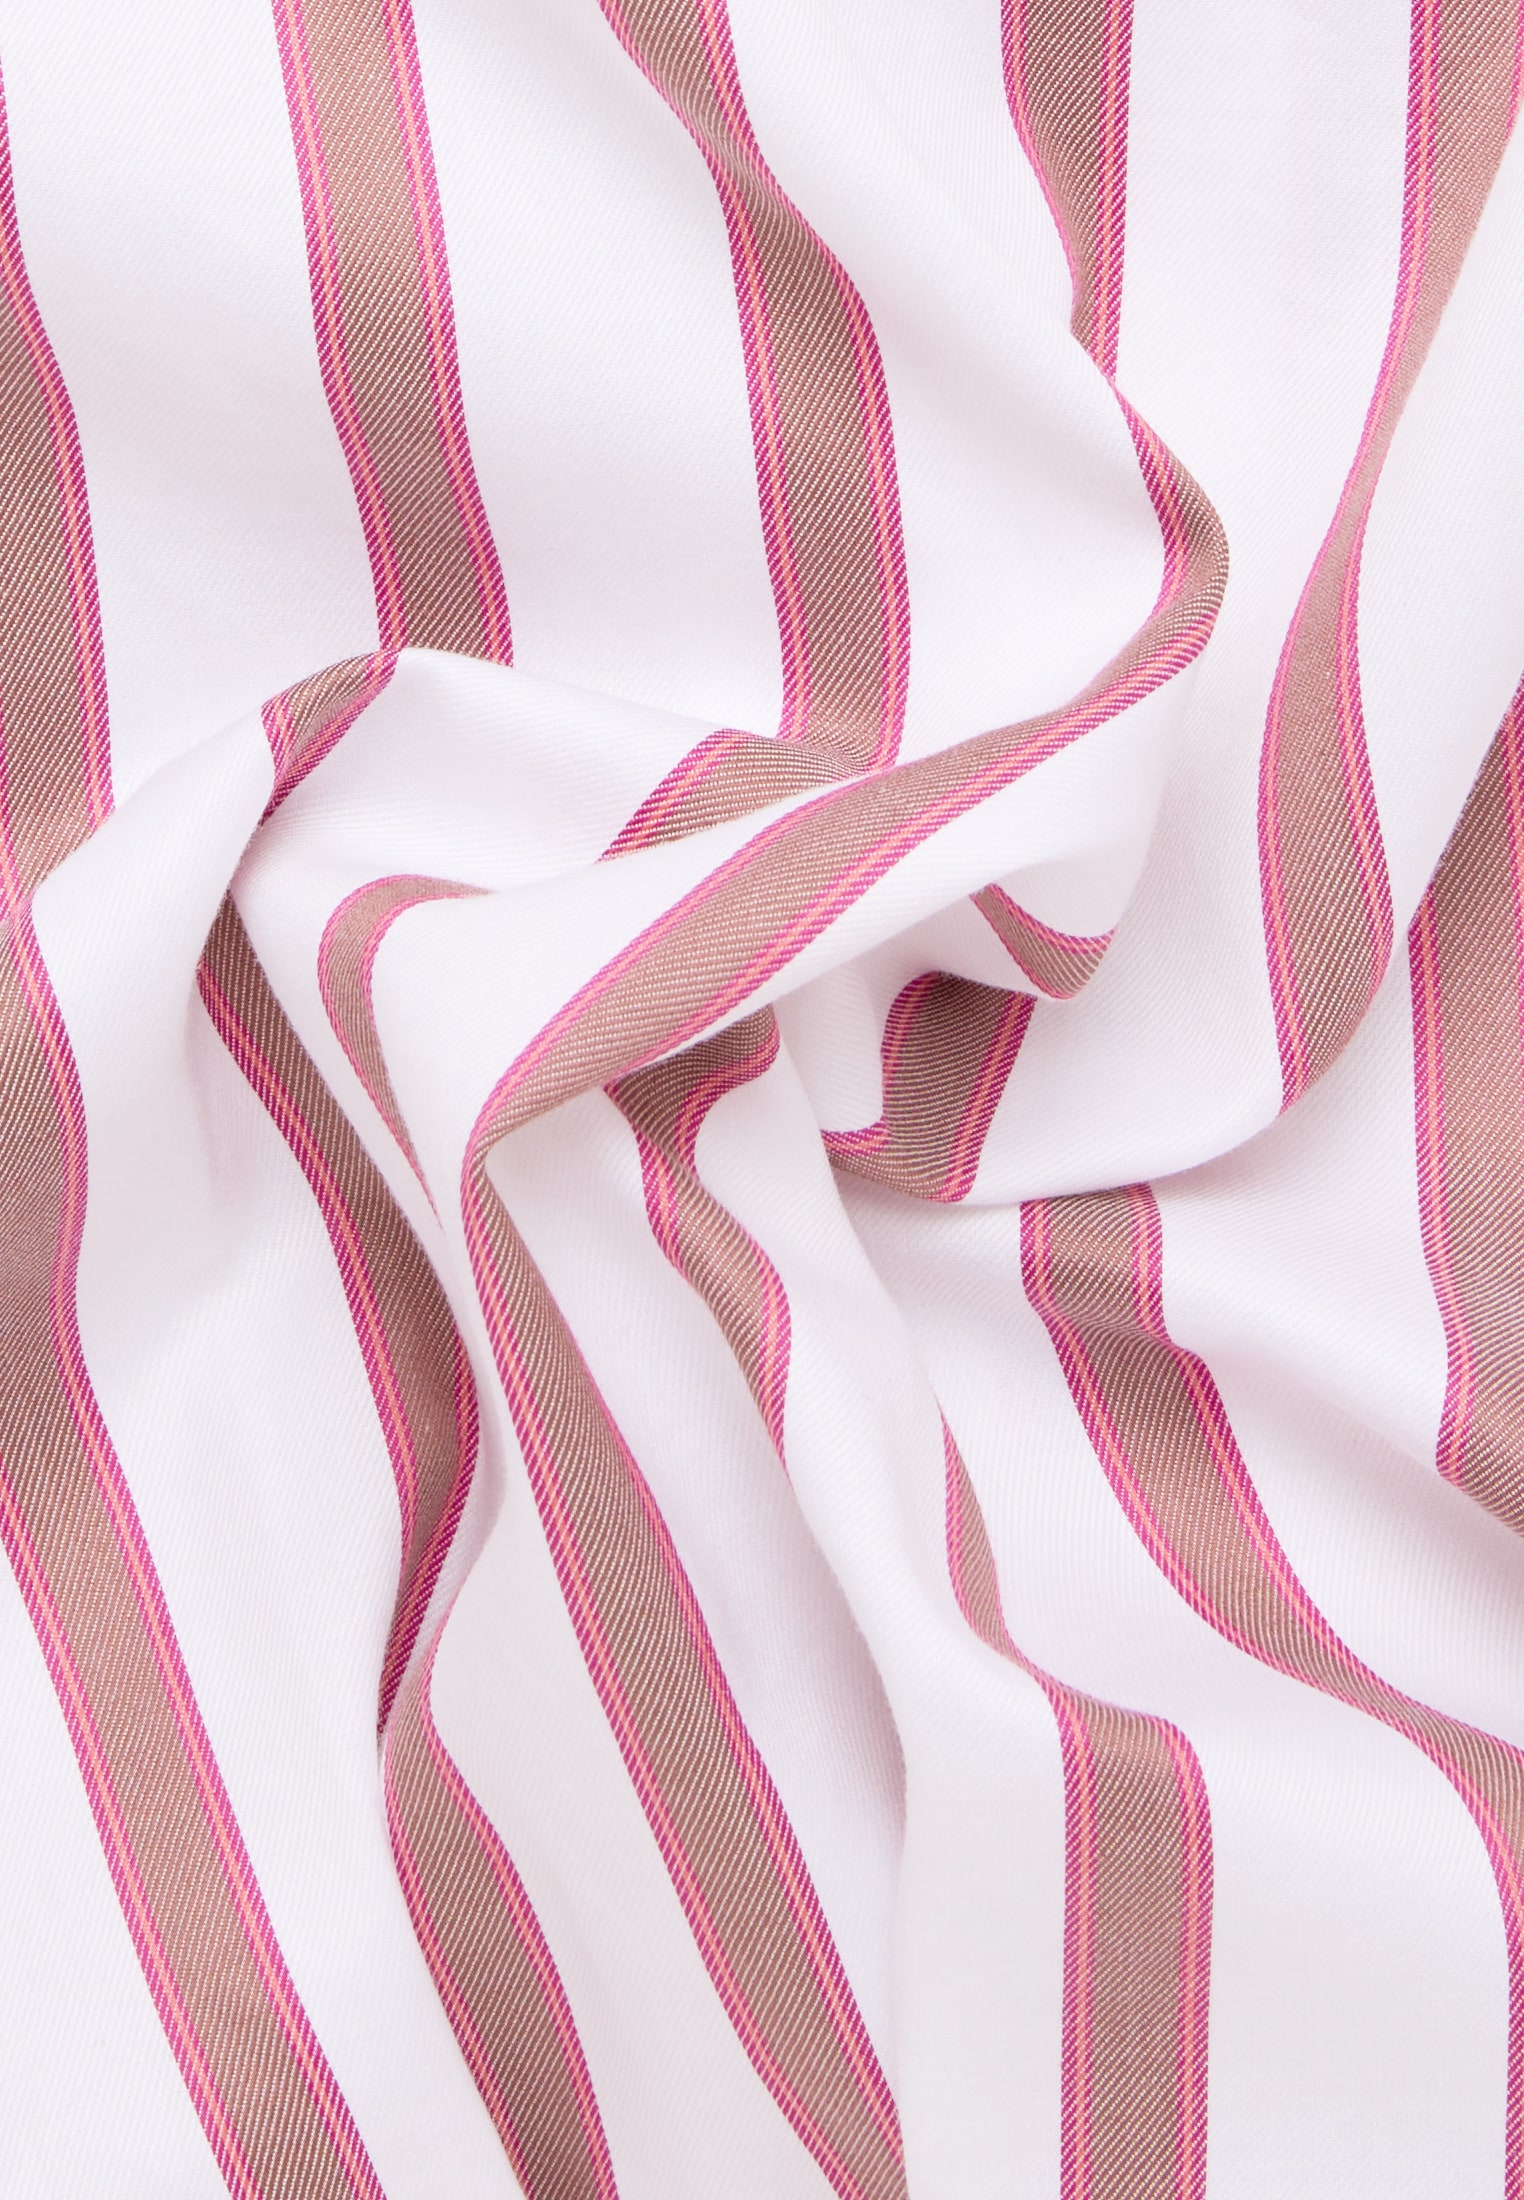 Soft Luxury Shirt Bluse in pink gestreift | pink | 46 | Langarm |  2BL04213-15-21-46-1/1